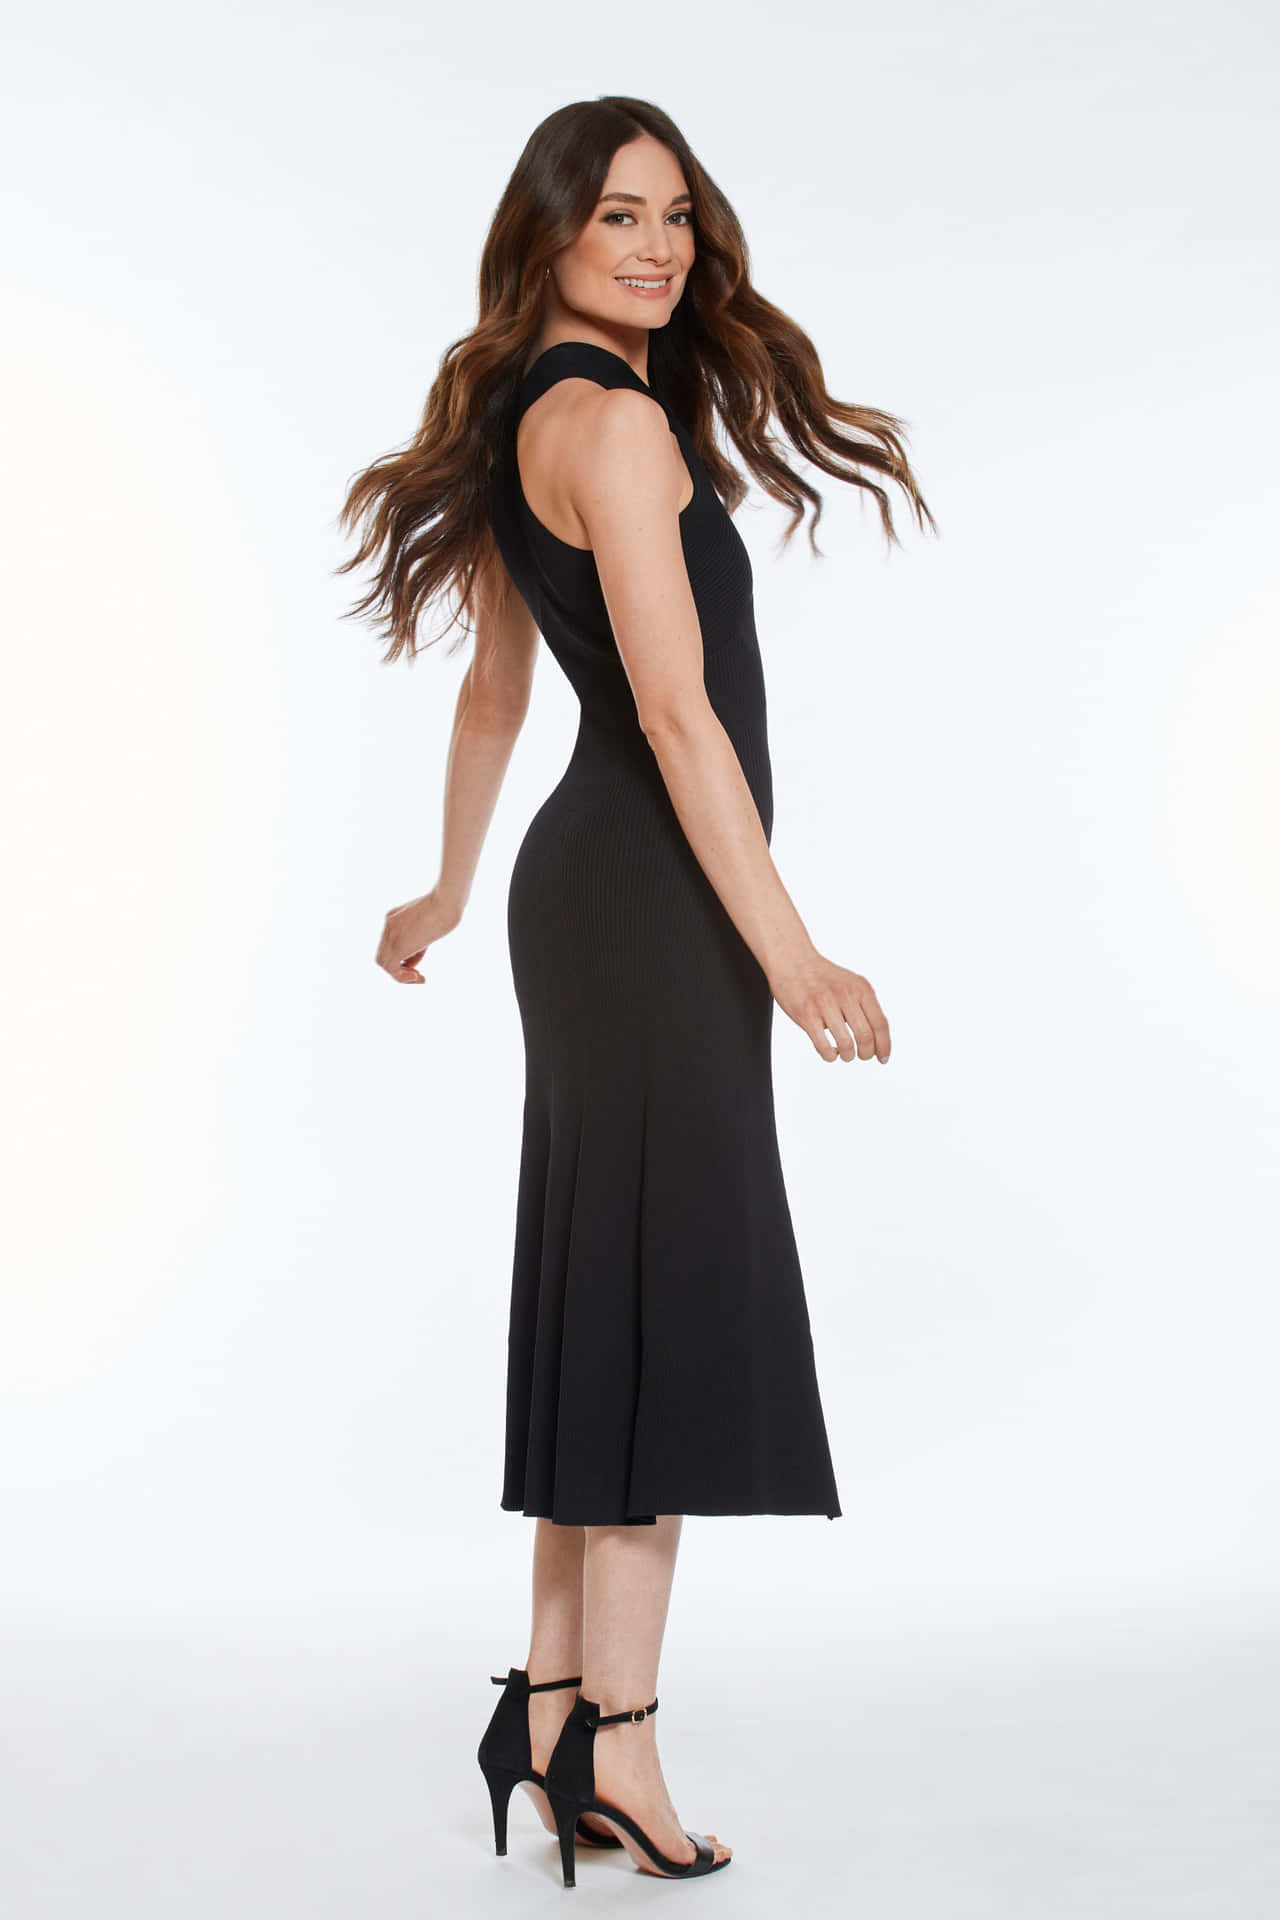 Elegant Womanin Black Dress Wallpaper